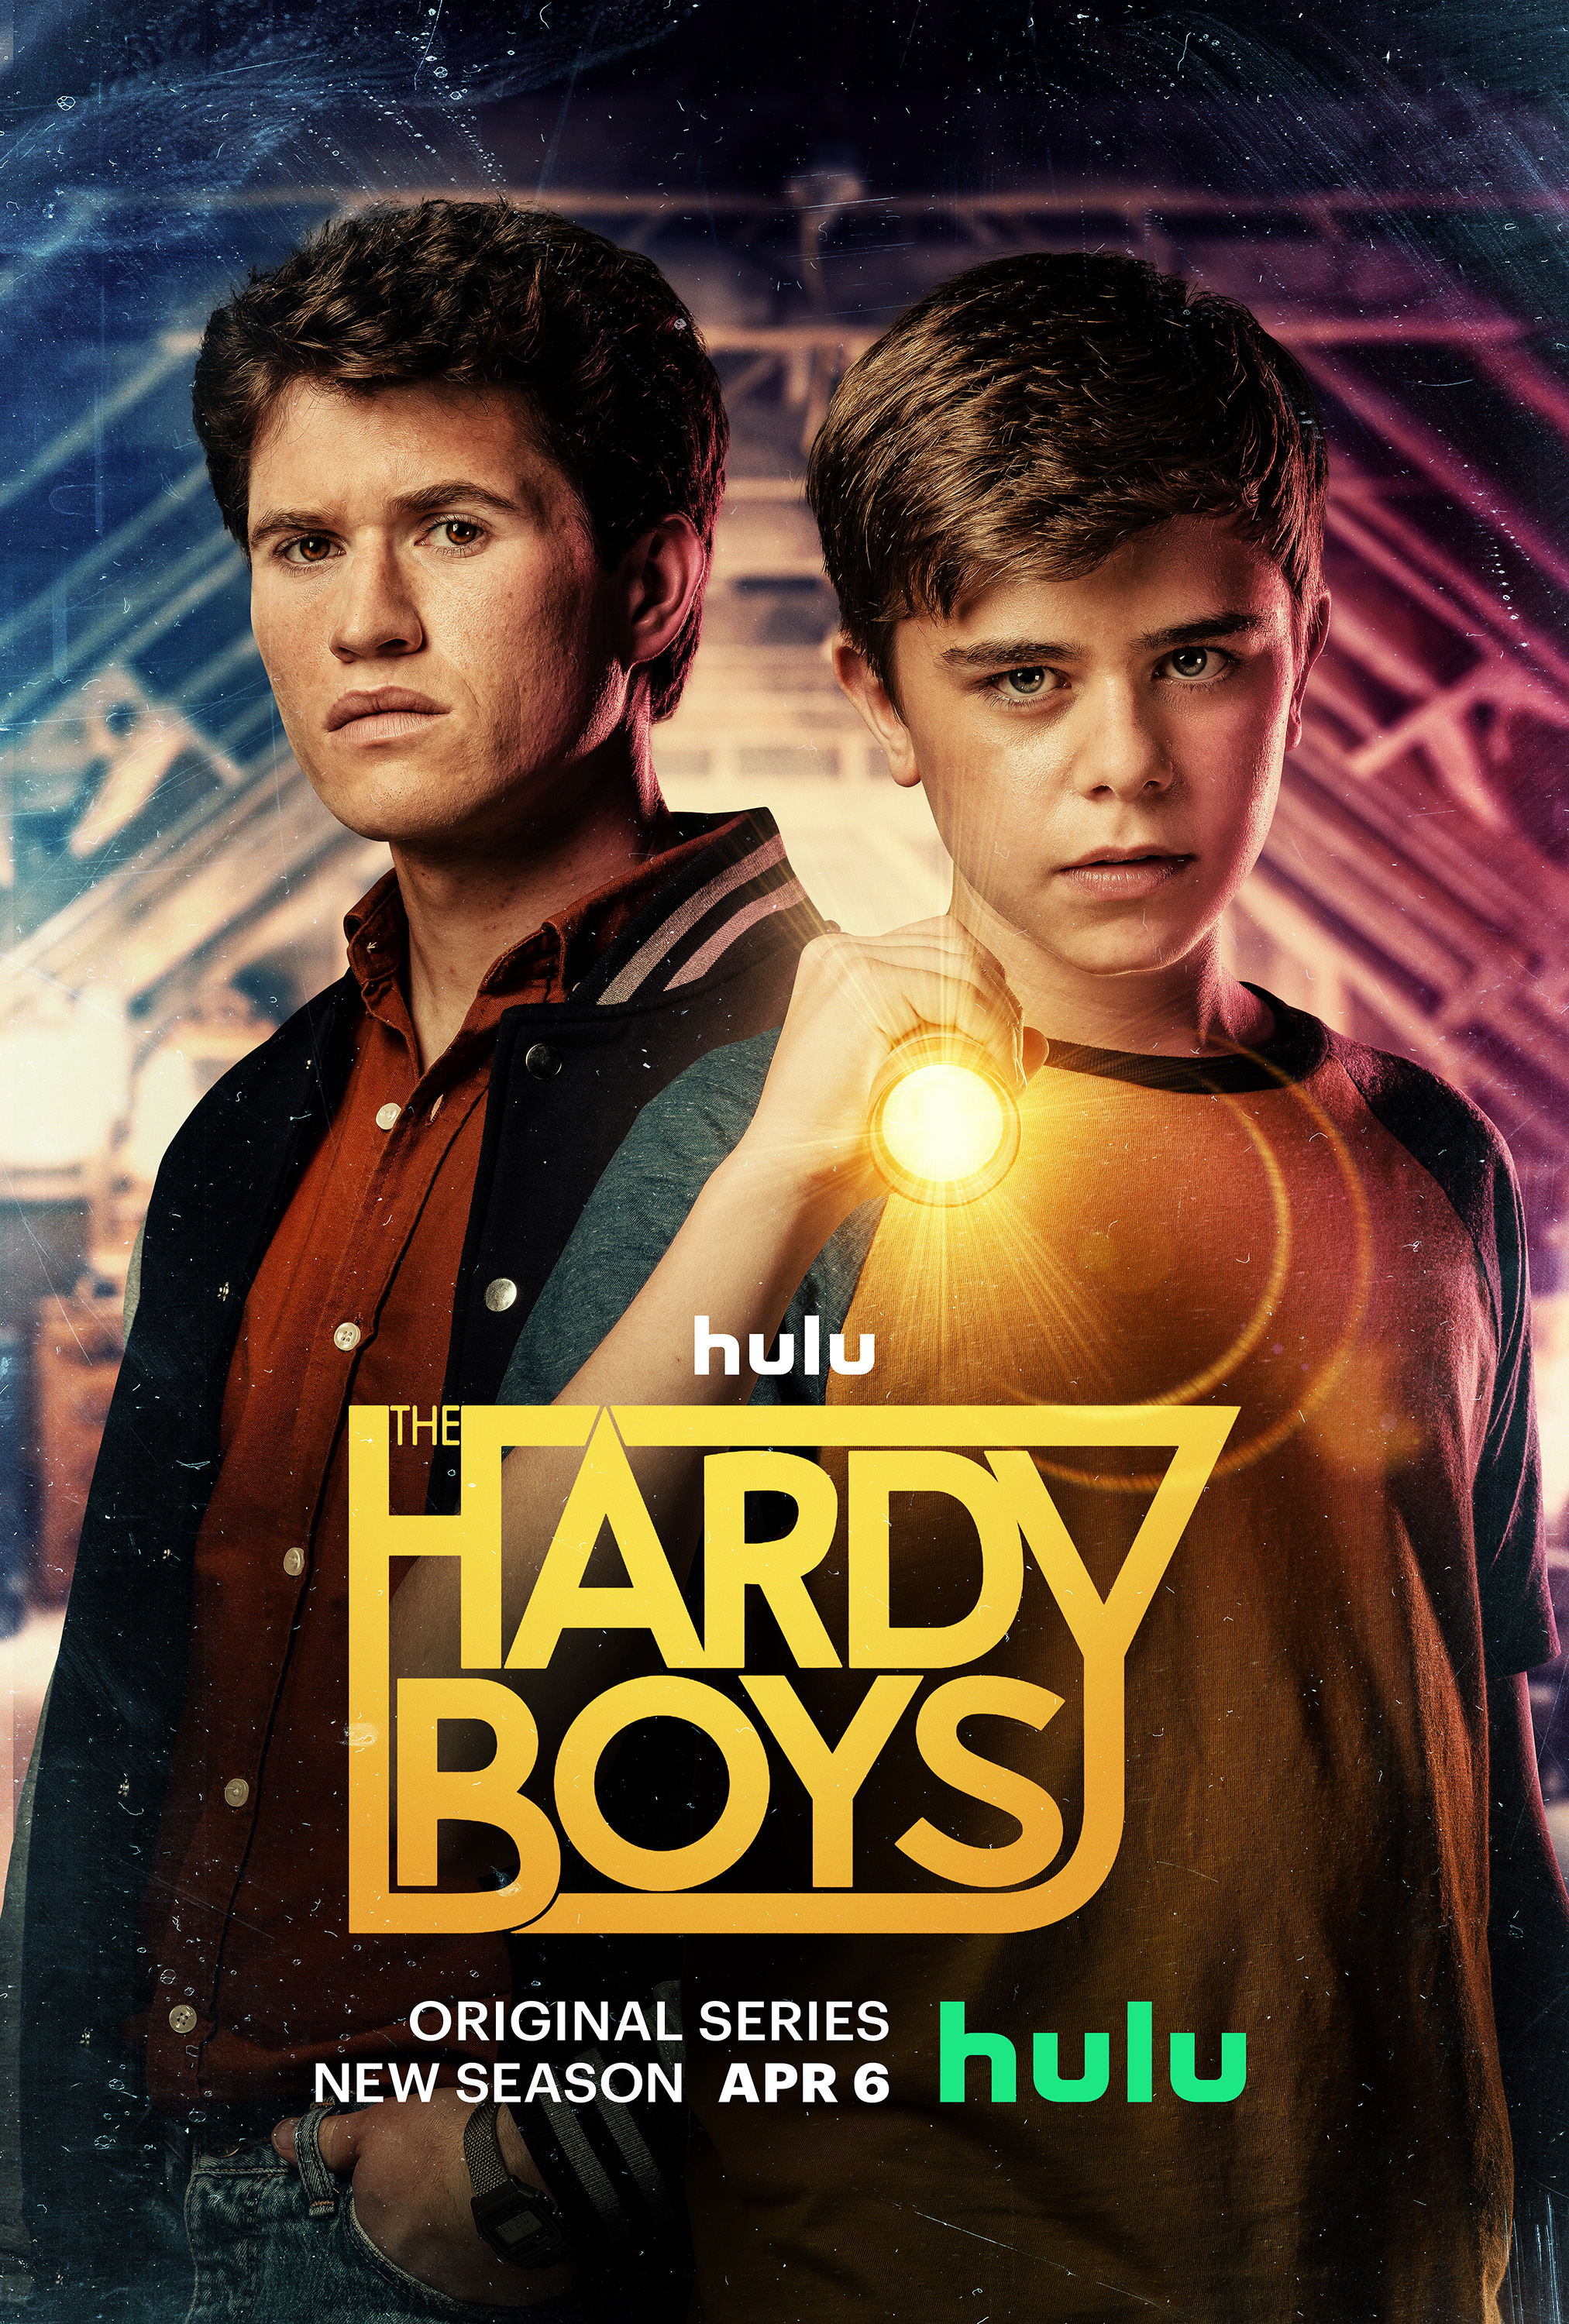 The Hardy Boys (2020 TV series)